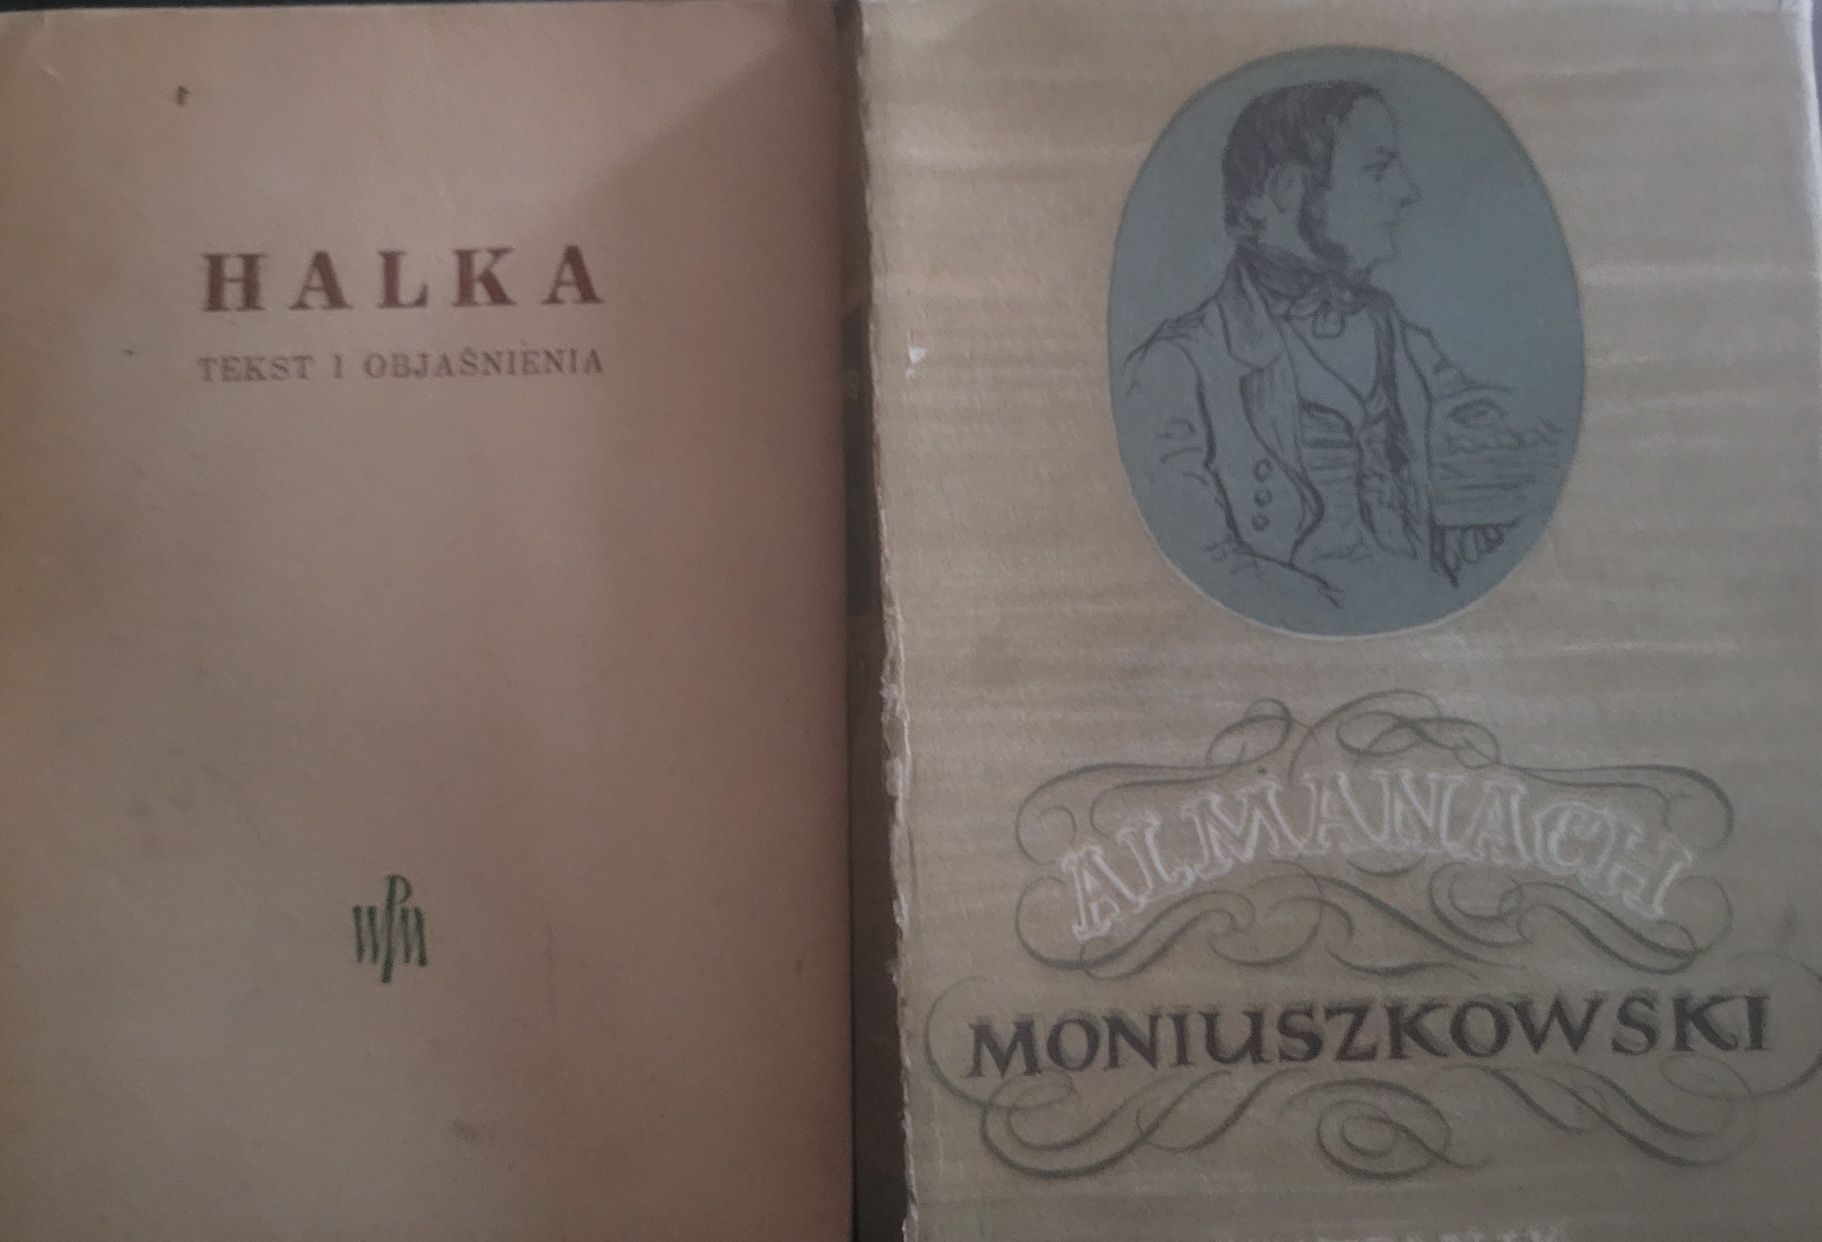 Halka.Tekst i objaśnienia 1952 PWM + Almanach moniuszkowski + gratis